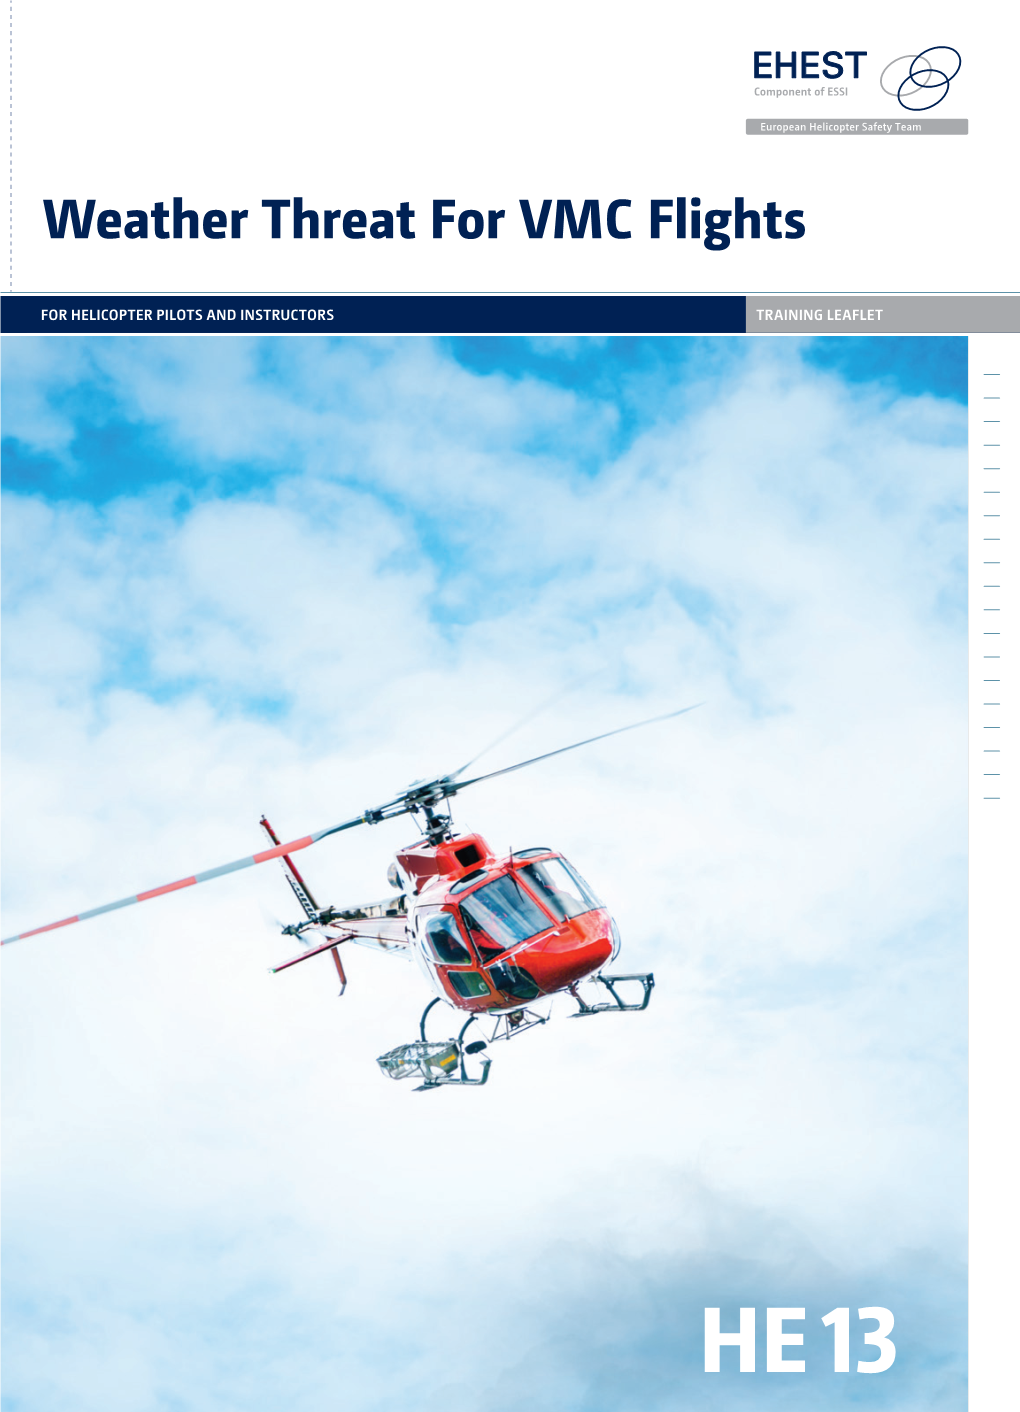 Weather Threat for VMC Flights